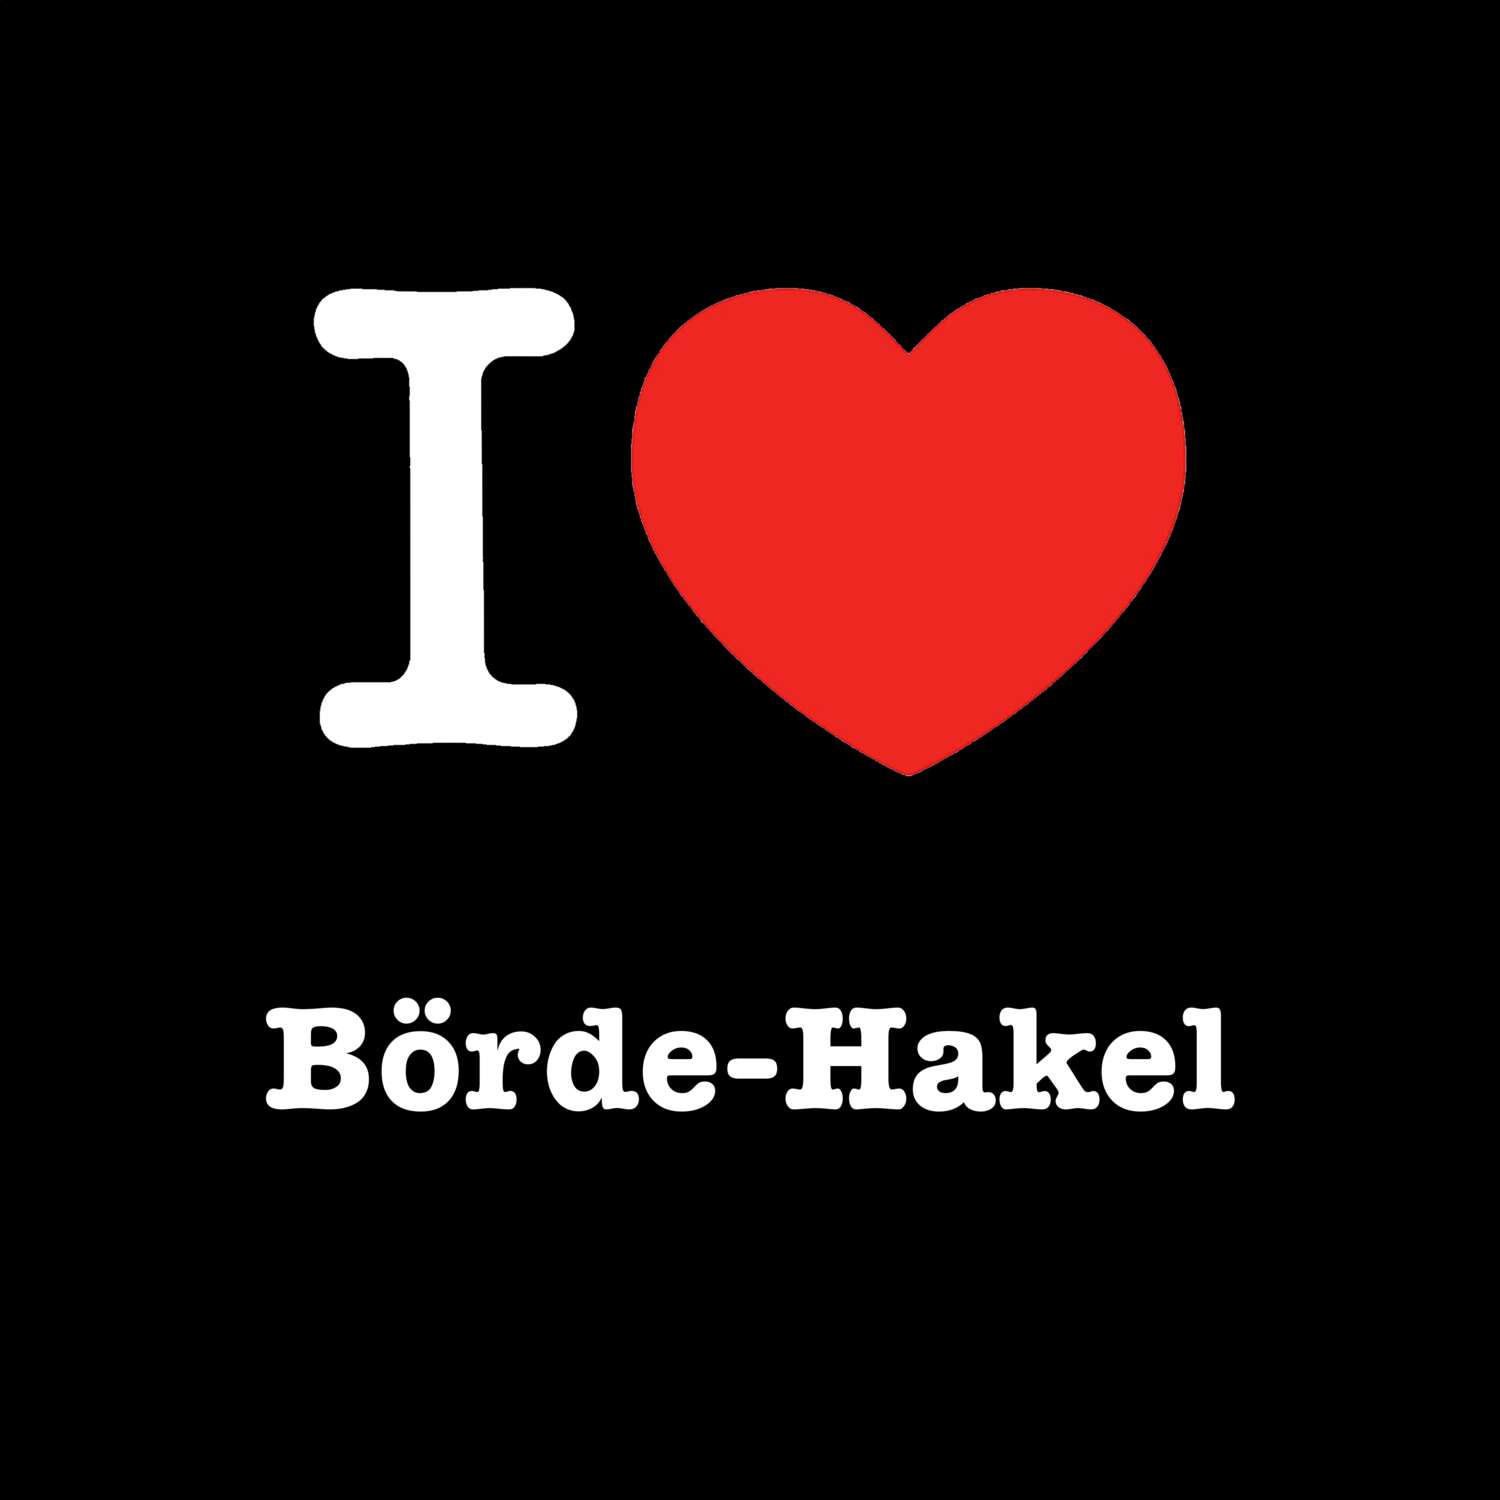 Börde-Hakel T-Shirt »I love«